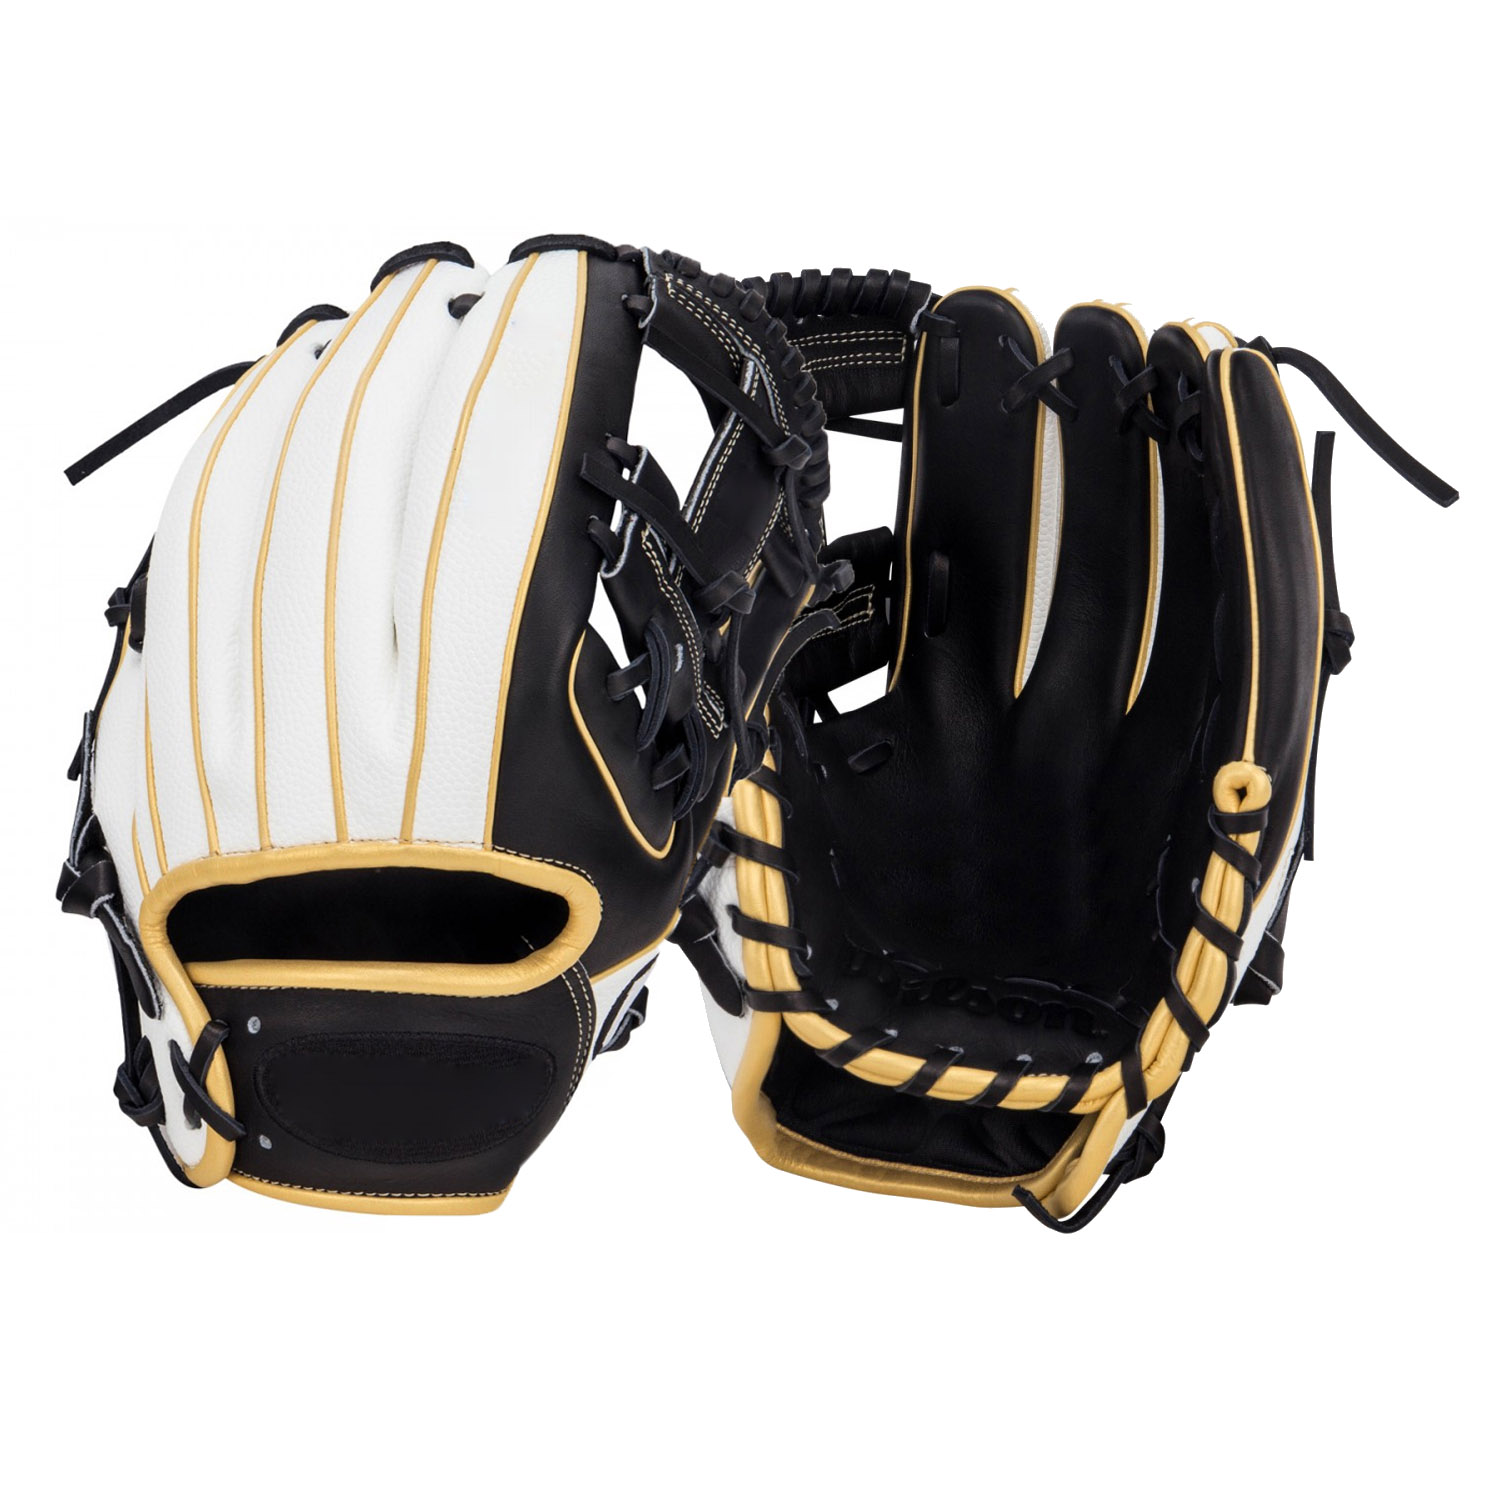 OEM japanese baseball gloves genuine leather Adults baseball gloves on sale